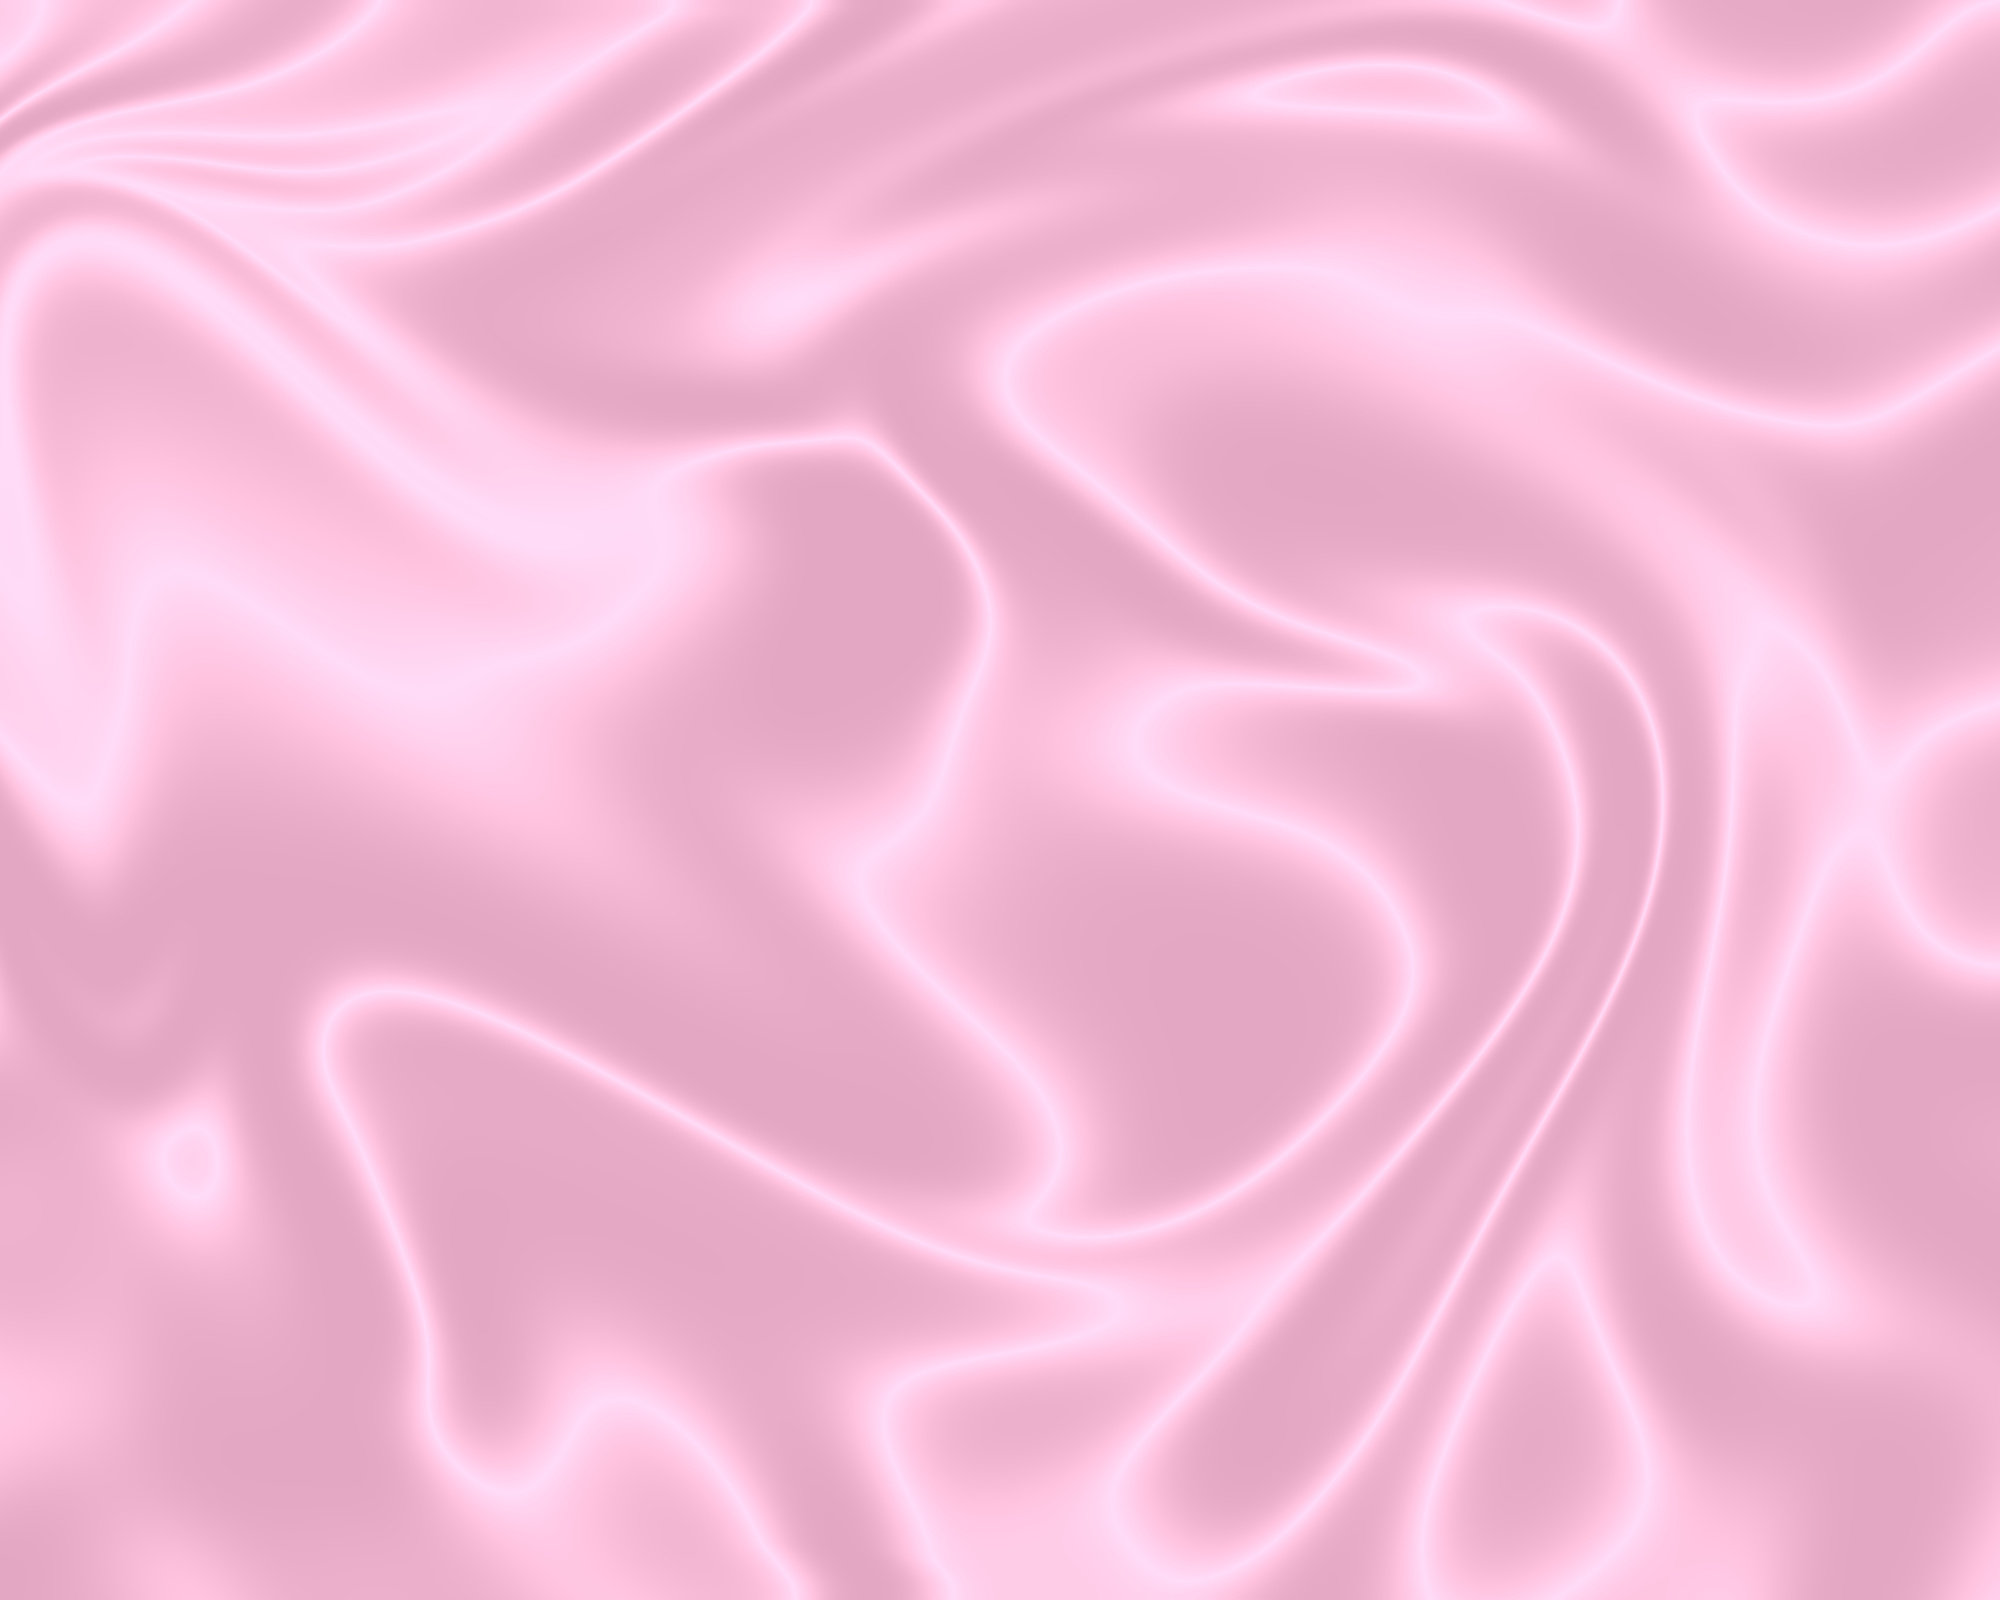 Pink Satin background. Pink Silk or satin luxury fabric texture